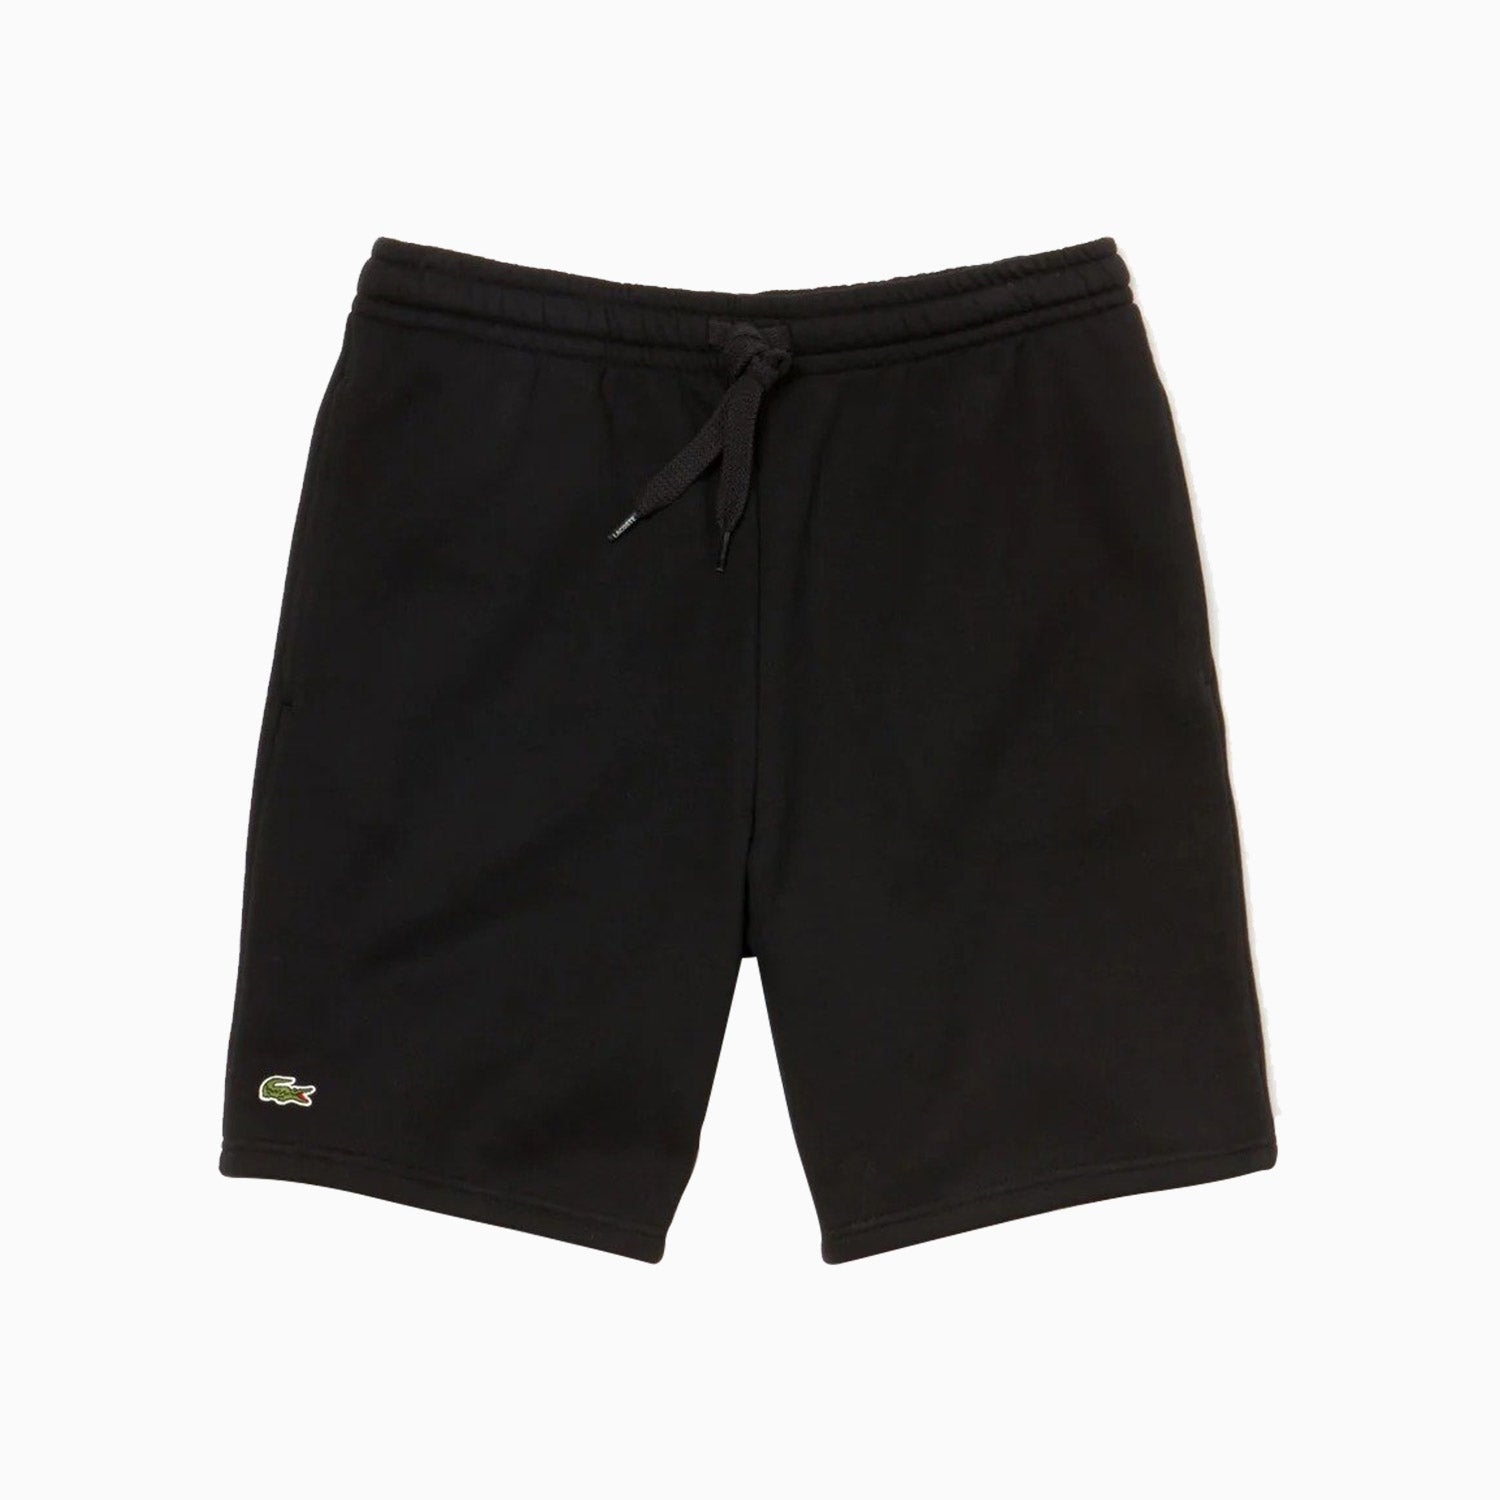 la-coste-mens-sport-tennis-fleece-shorts-gh2136-51-240